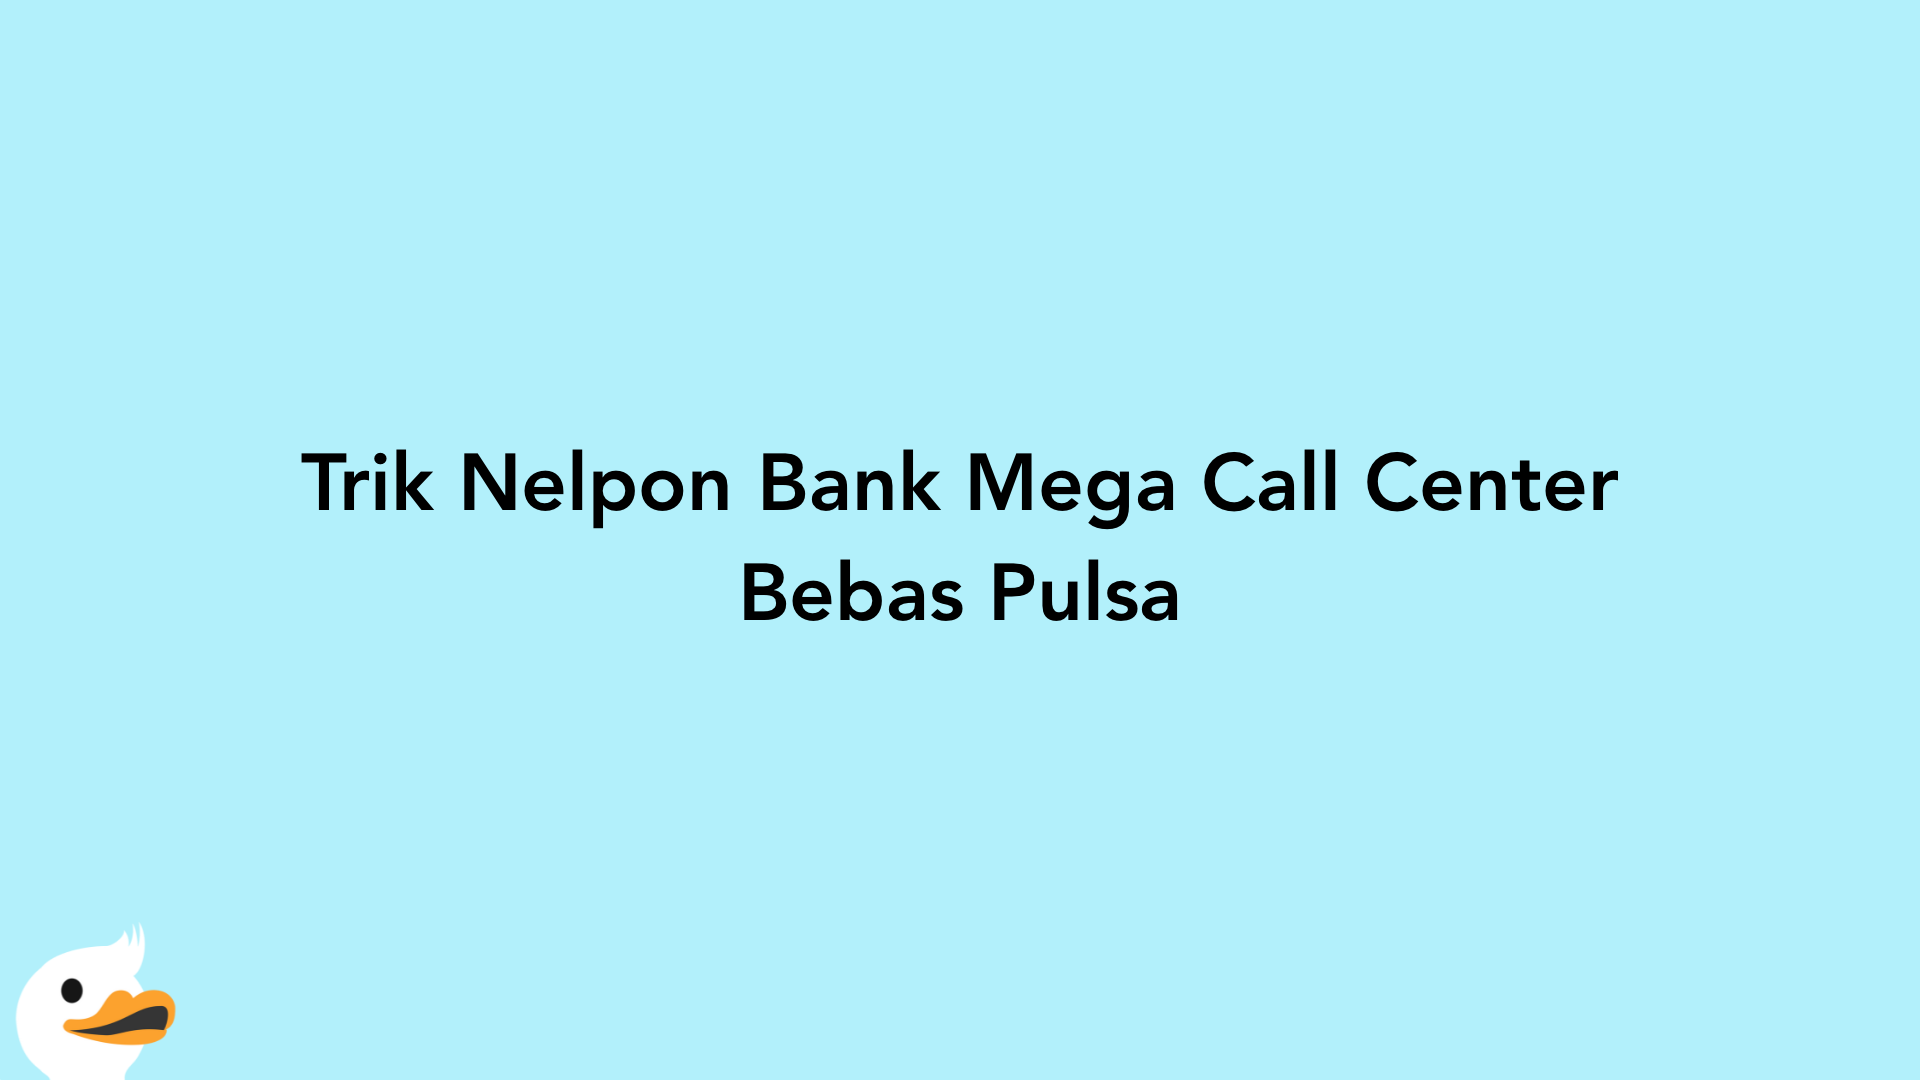 Trik Nelpon Bank Mega Call Center Bebas Pulsa